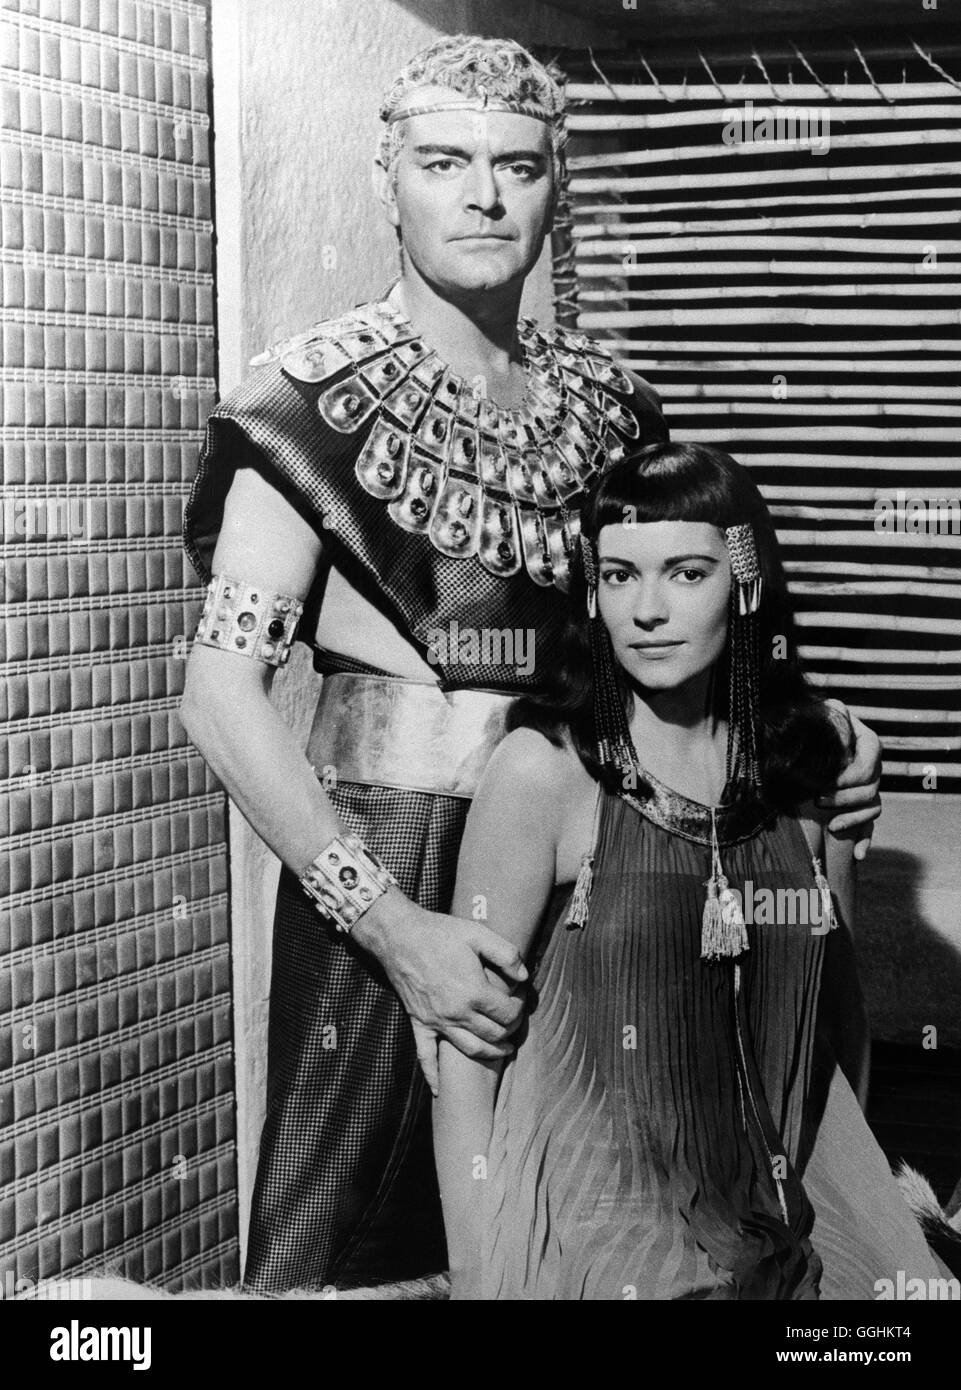 LAND DER PHARAONEN / Land of the pharaos USA 1955 / Howard Hawks Szene mit Pharao (JACK HAWKINS) und Königin Nailla (KERIMA) Regie: Howard Hawks aka. Land of the pharaos Stock Photo